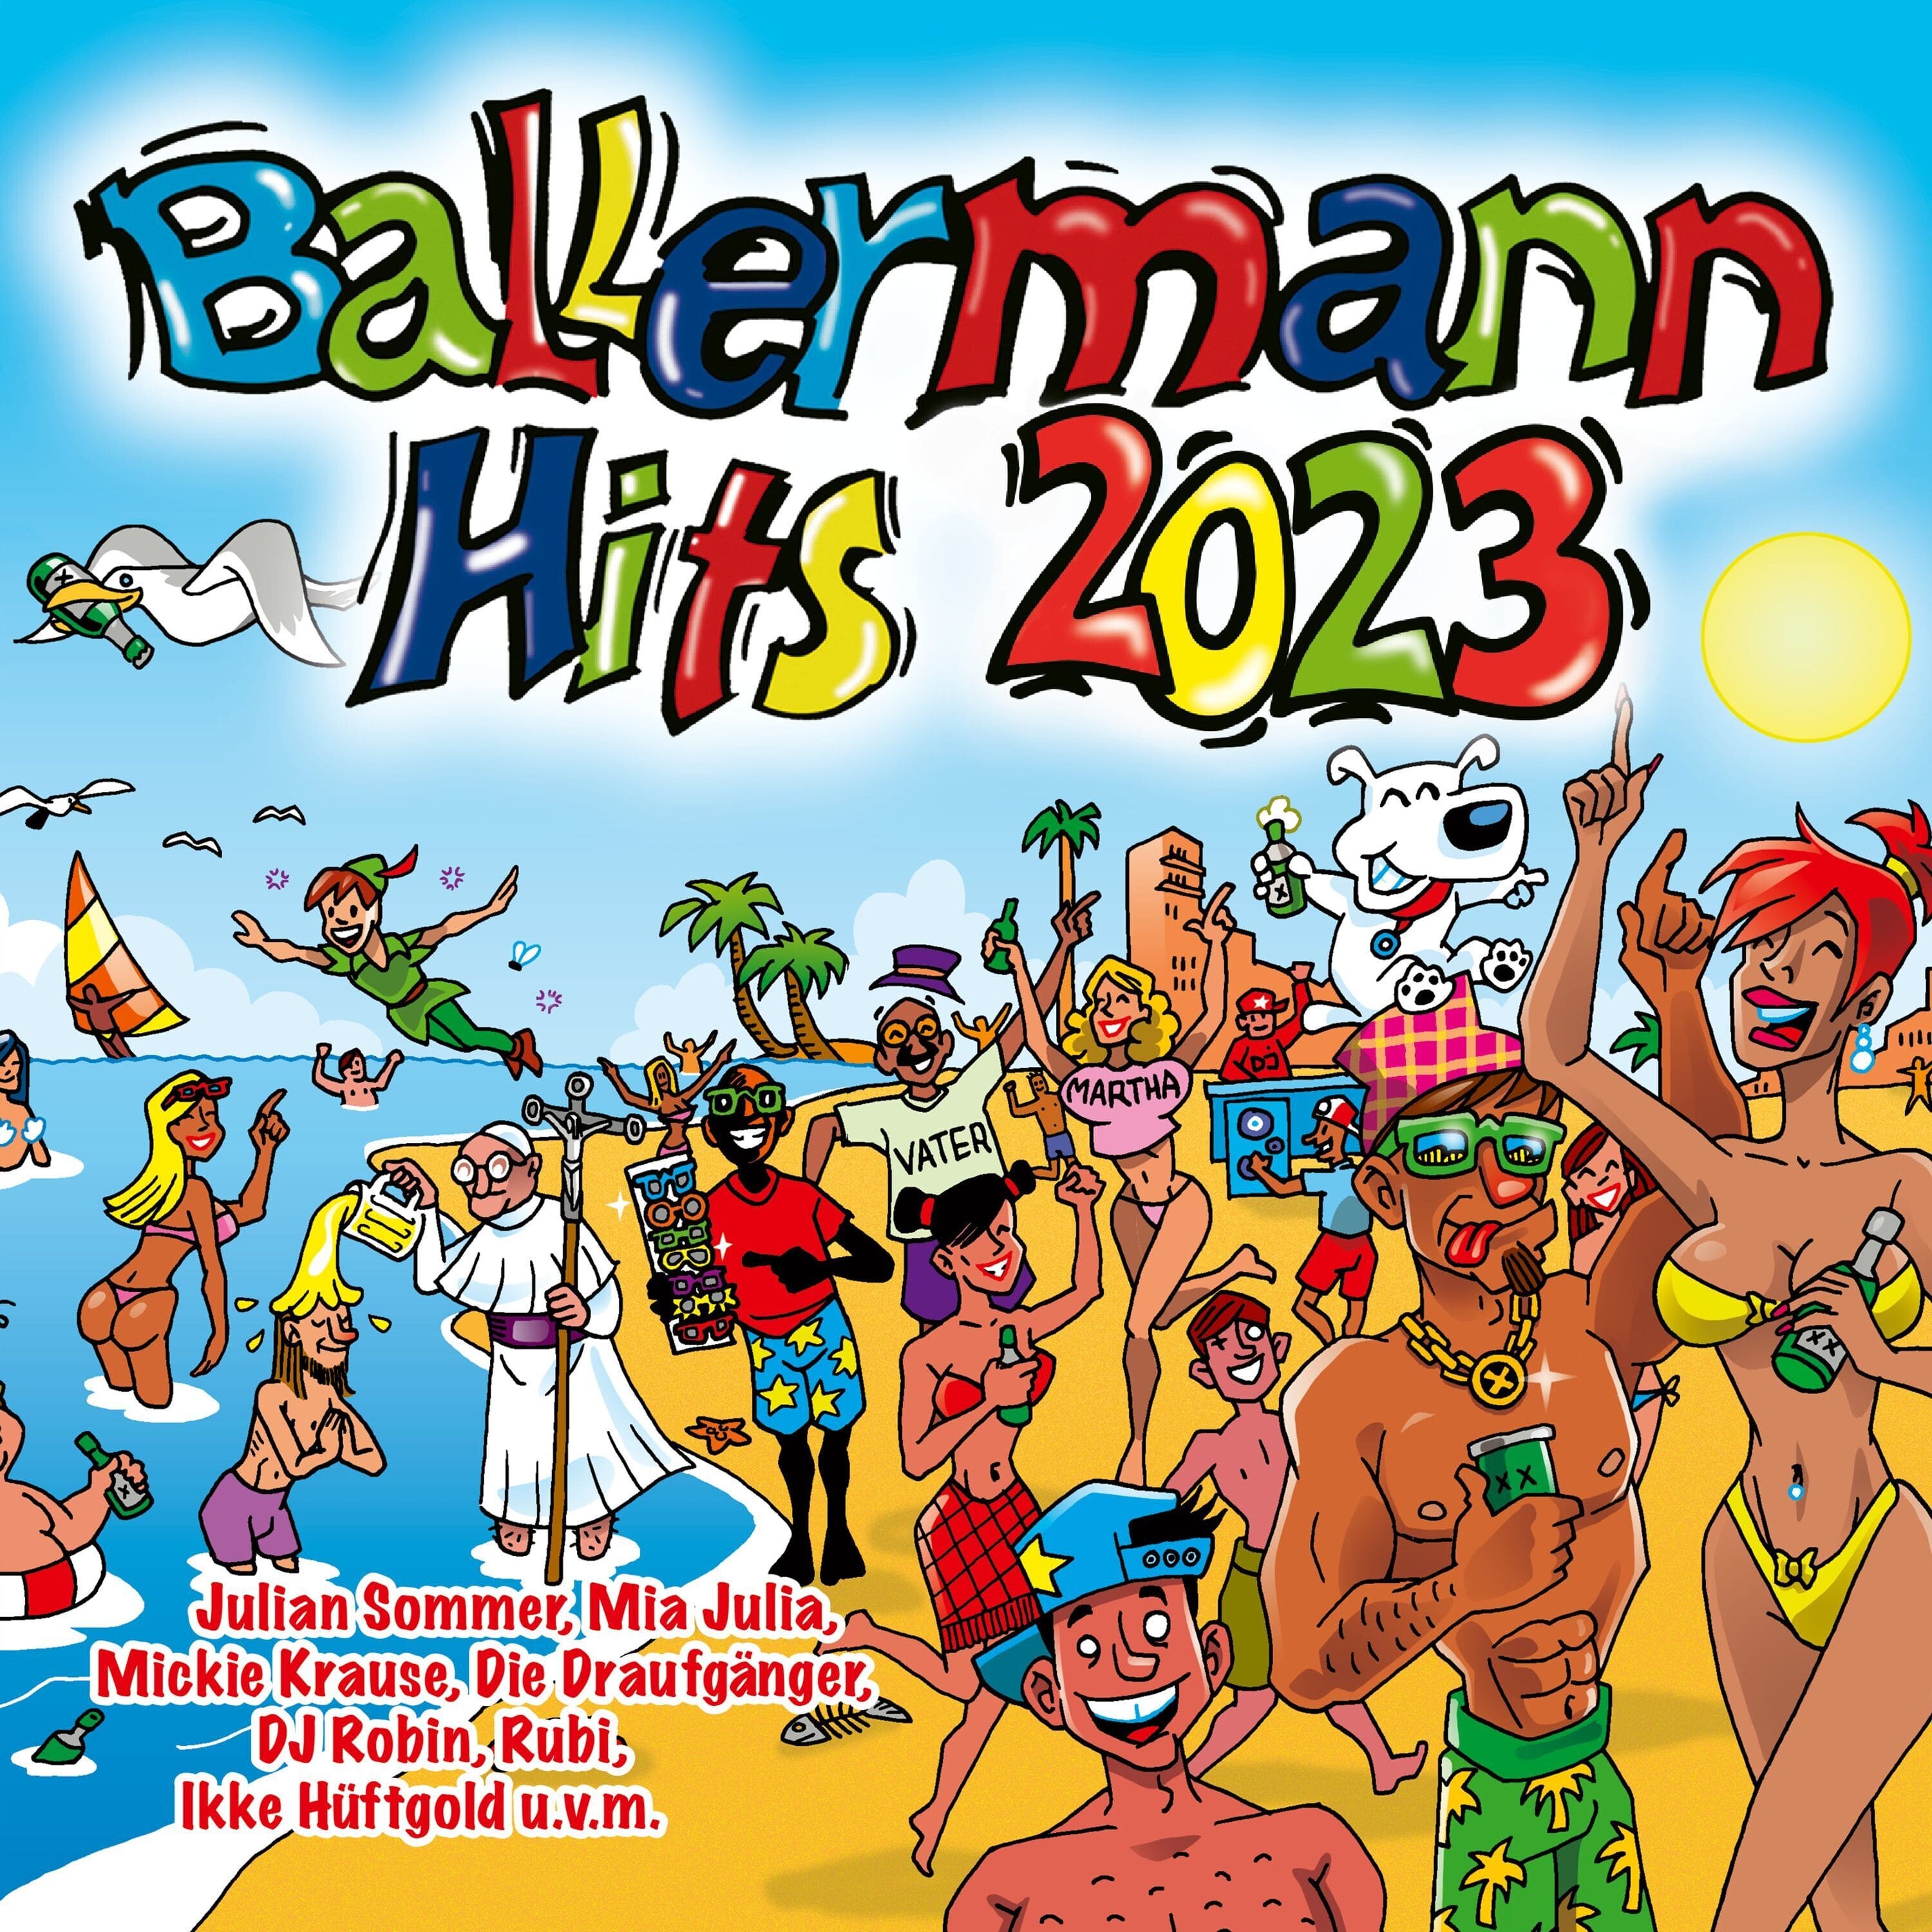 Bravado Ballermann Hits 2023 Various Artists 2CD